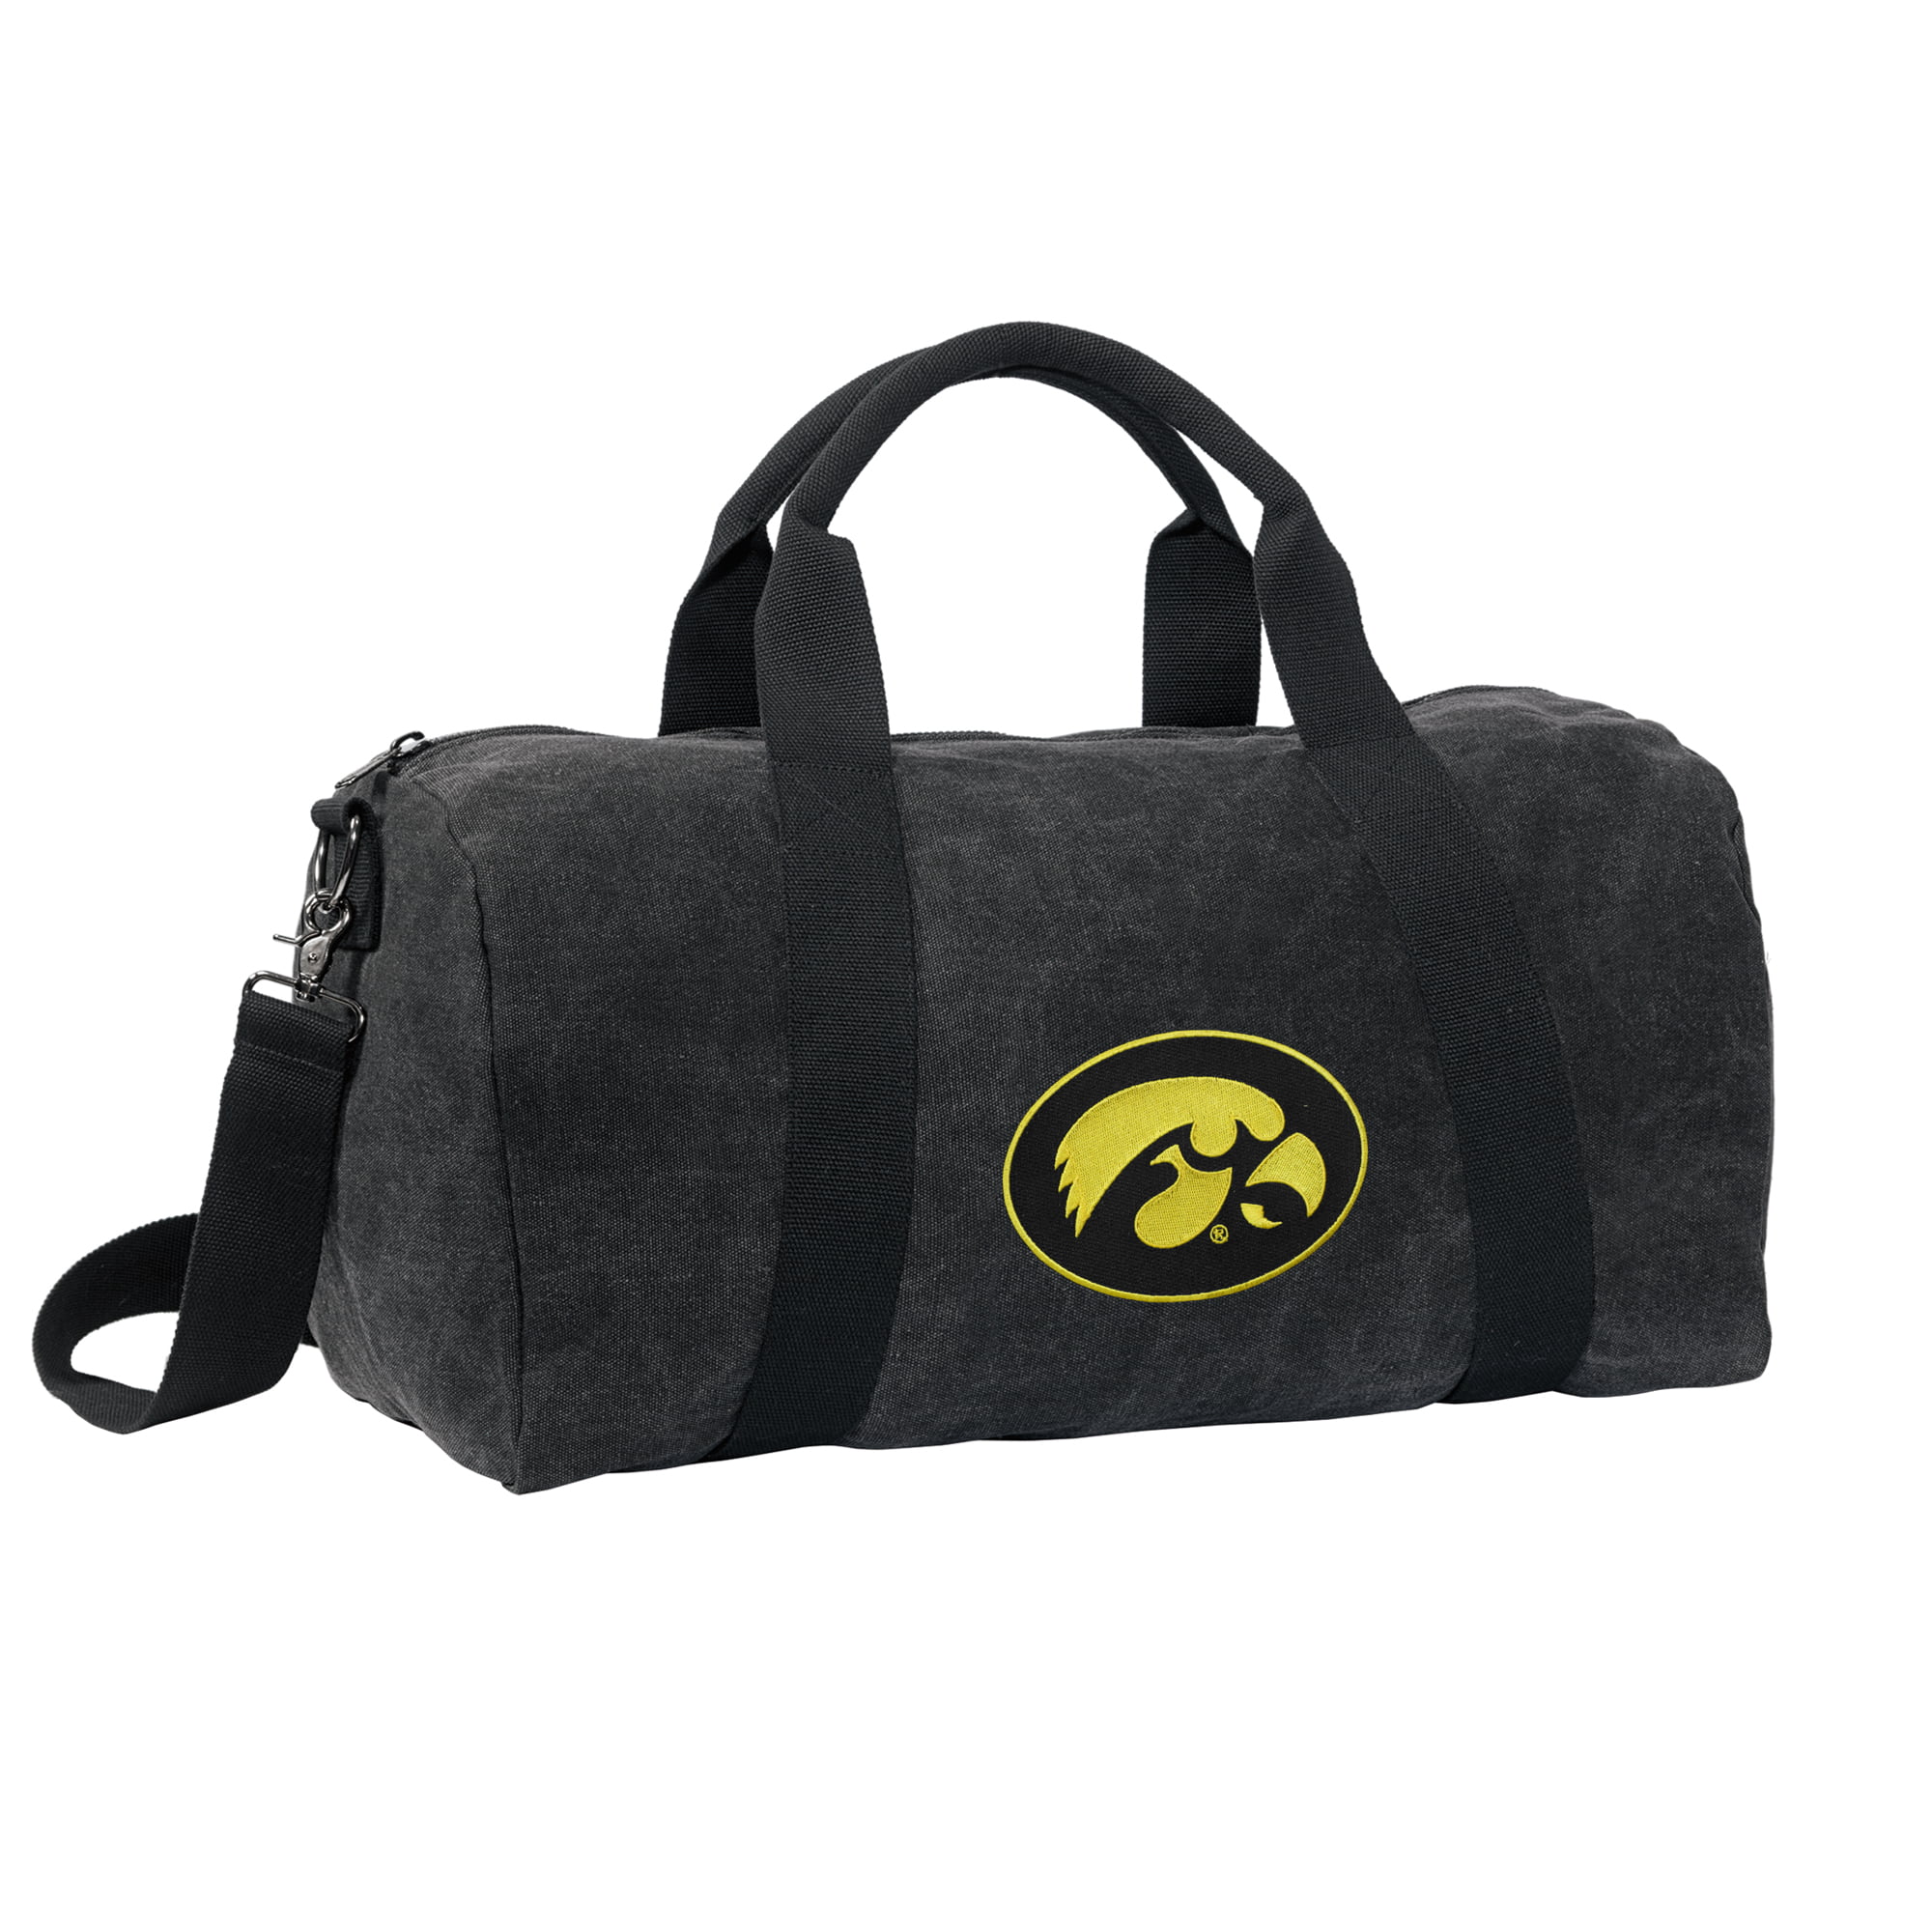 Broad Bay Small Iowa Hawkeyes Duffel Bag University of Iowa Gym Bags or Suitcase 